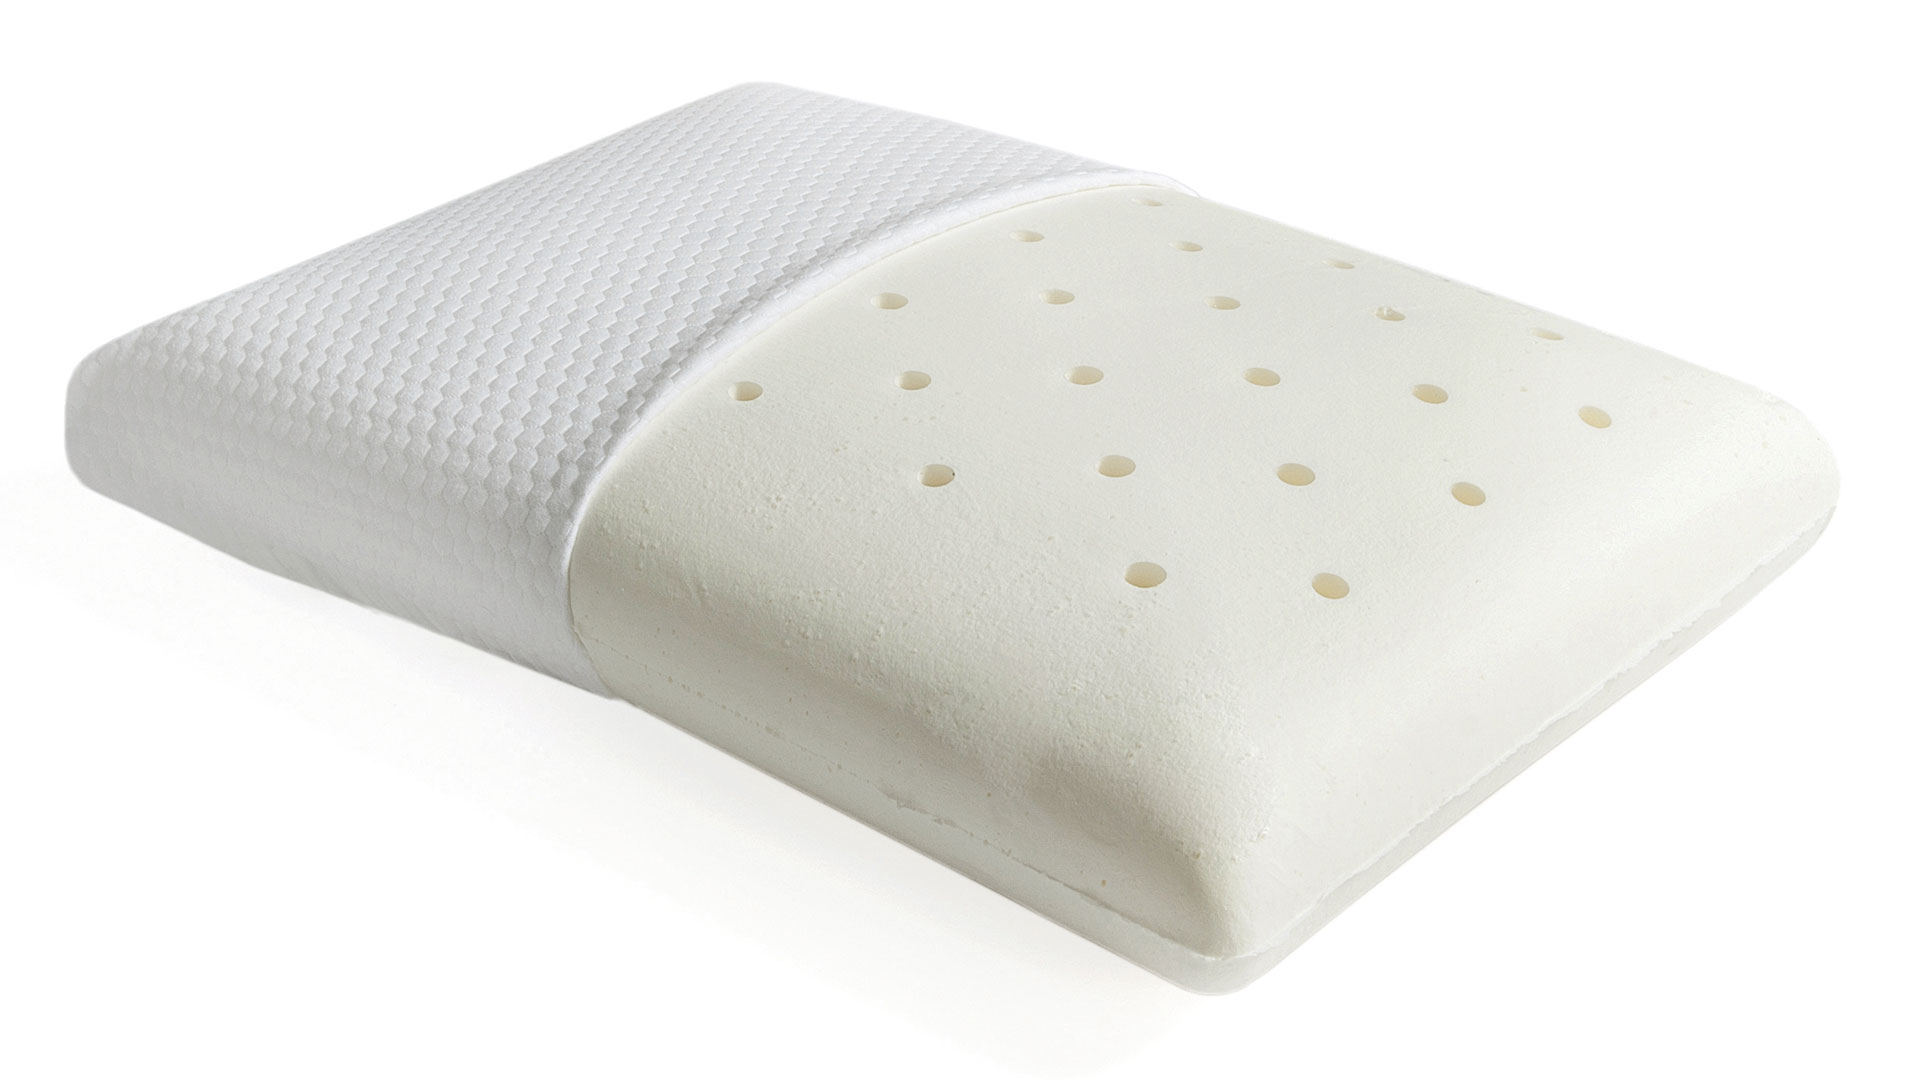 COSMETIC memory foam pillow